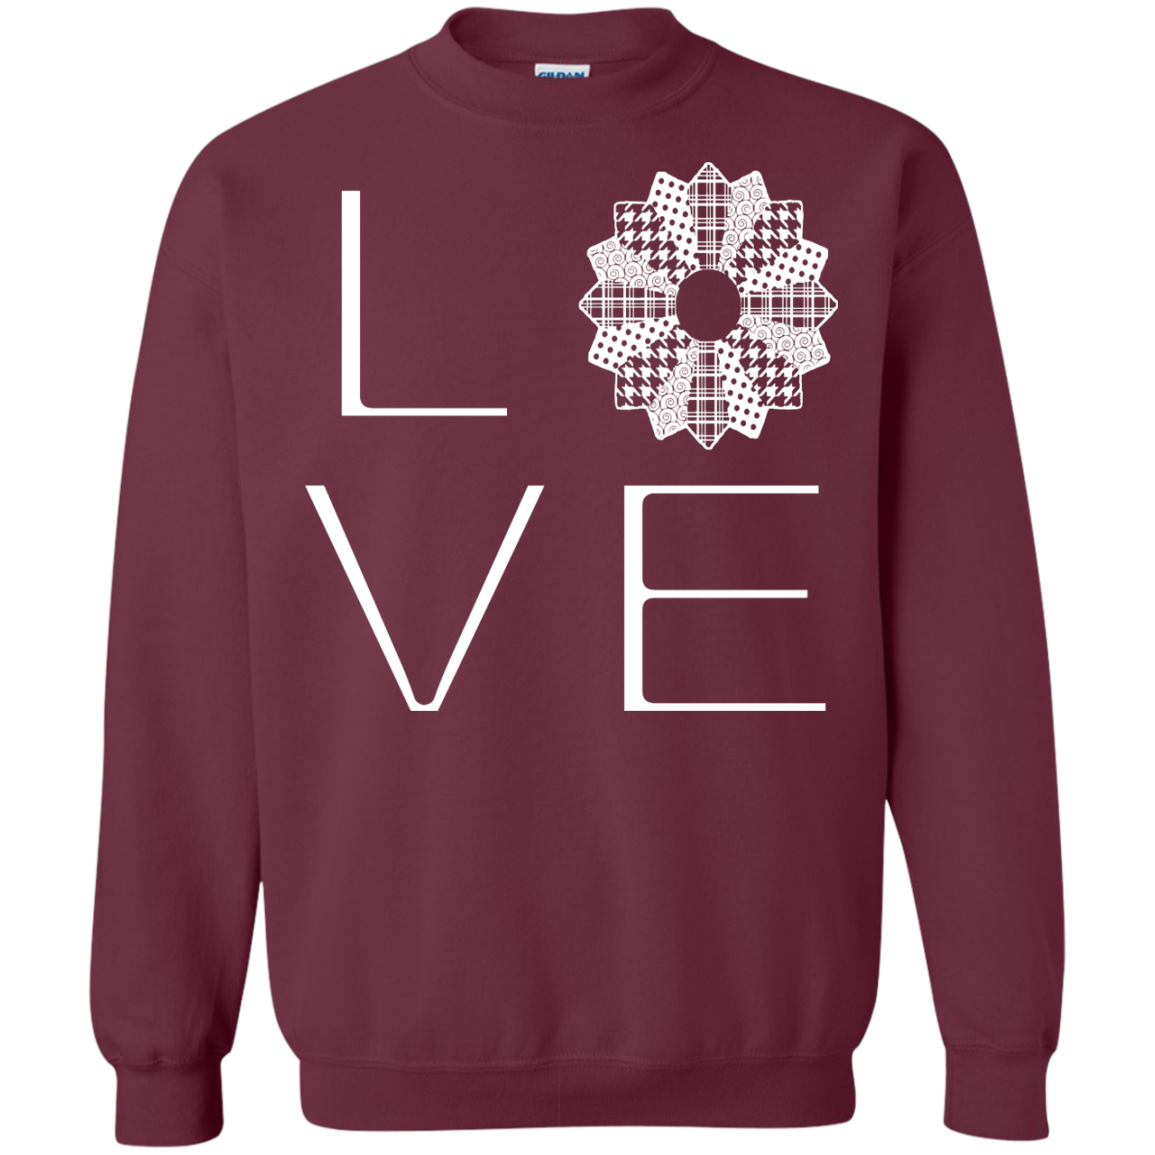 LOVE Quilting Crewneck Sweatshirts - Crafter4Life - 3